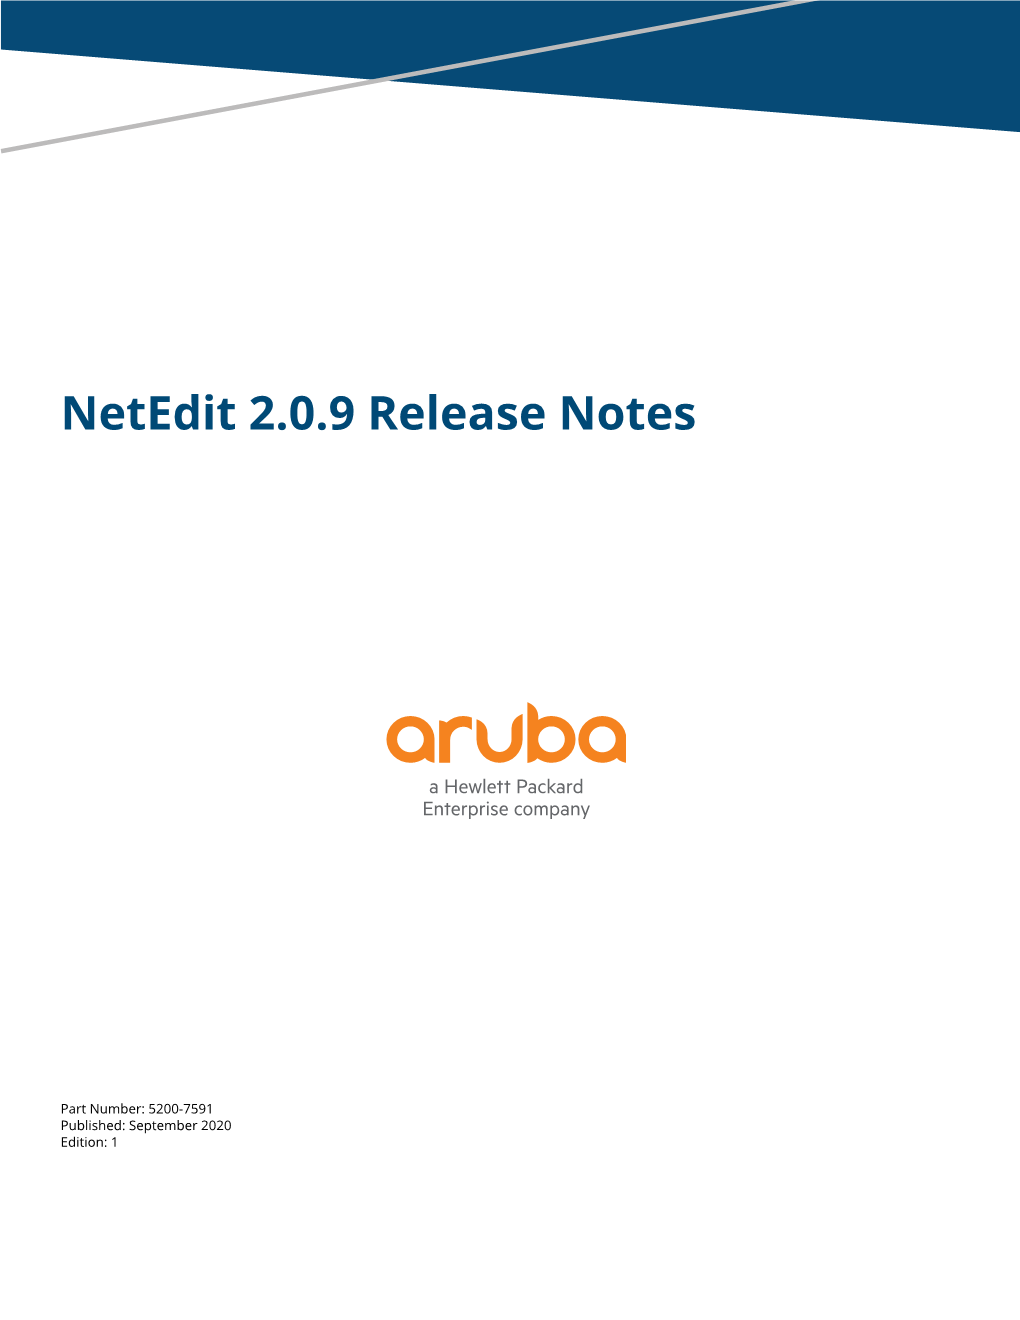 Netedit 2.0.9 Release Notes